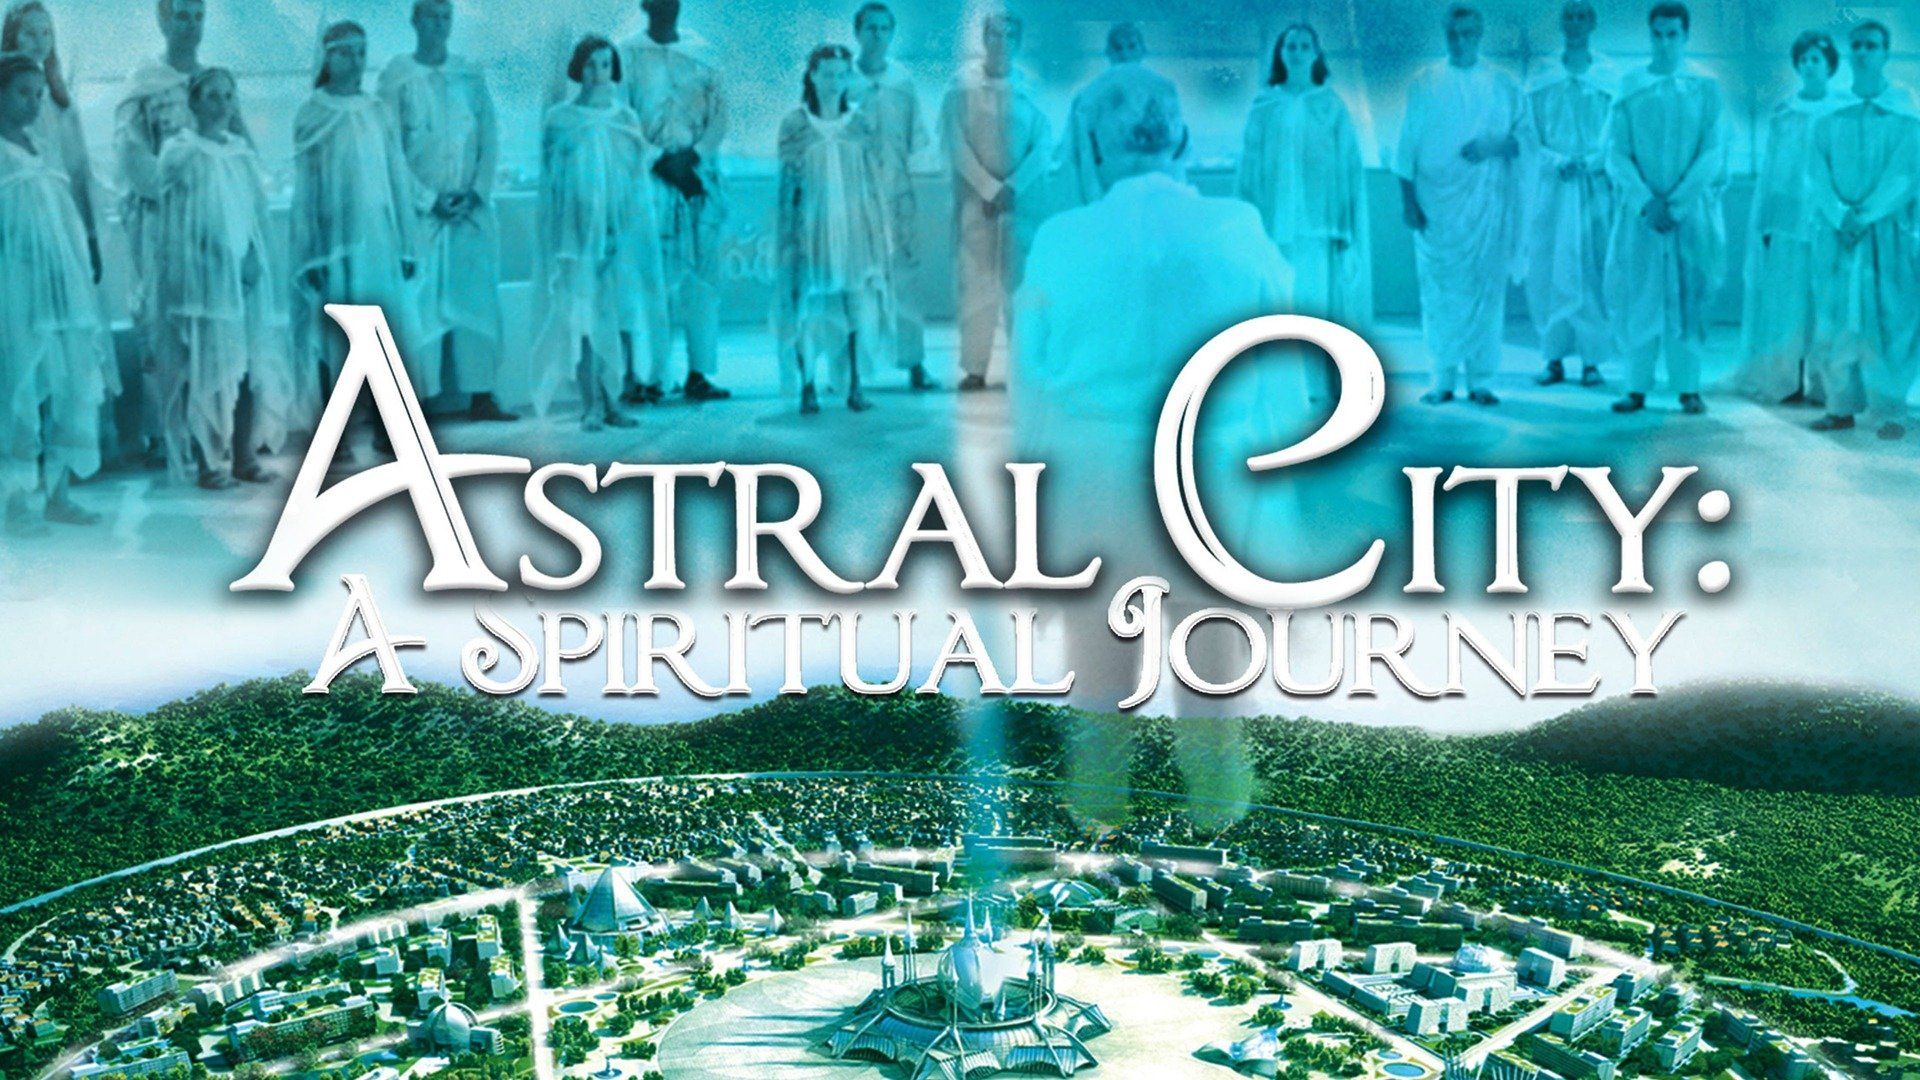 astral city spiritual journey movie